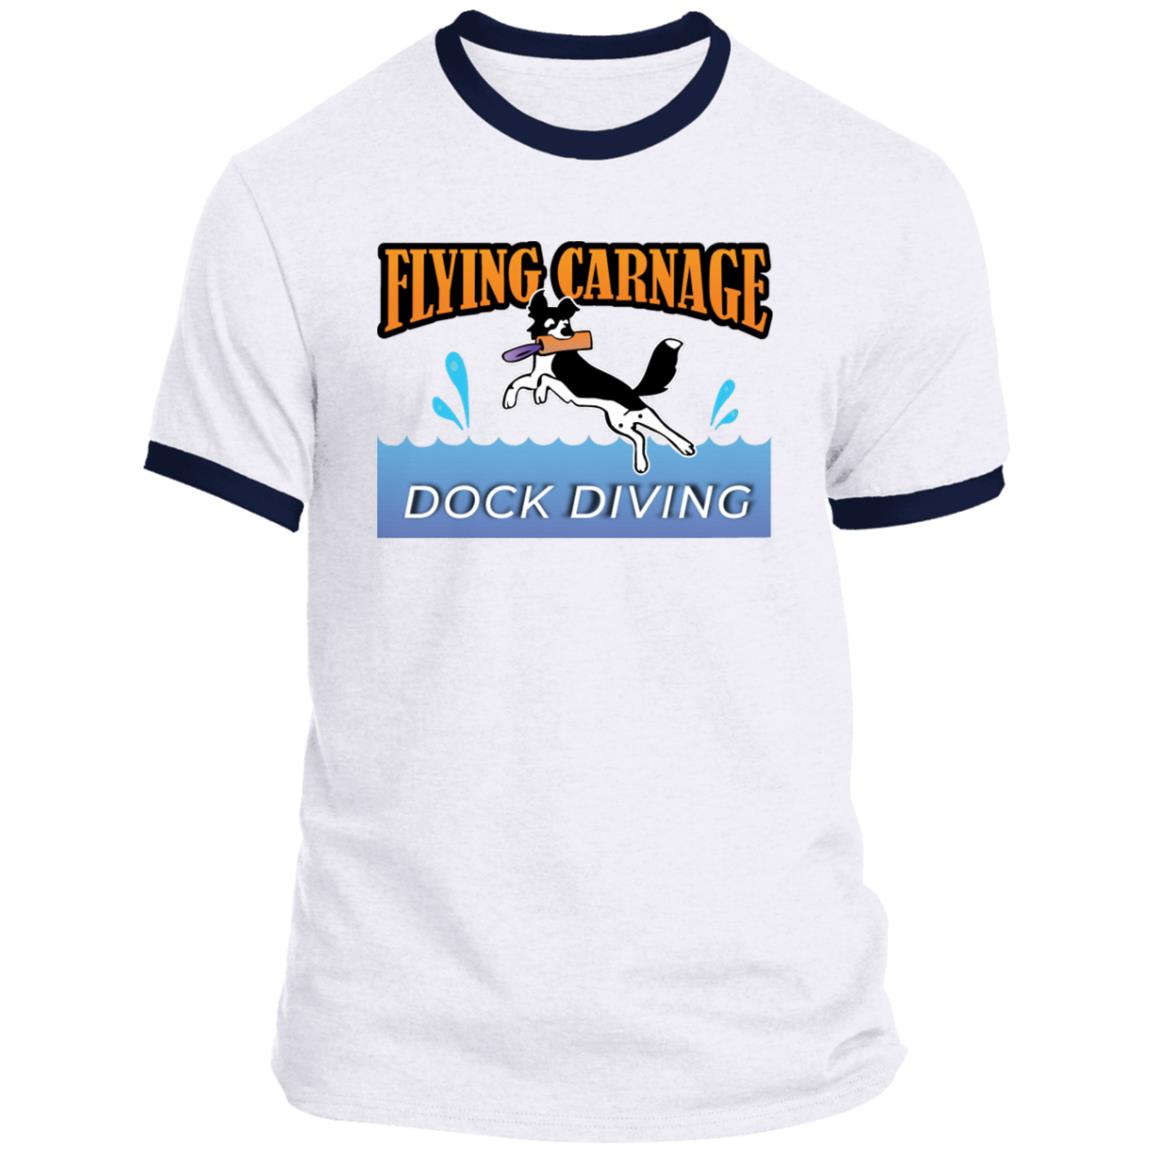 Flying Carnage Ringer T-Shirt